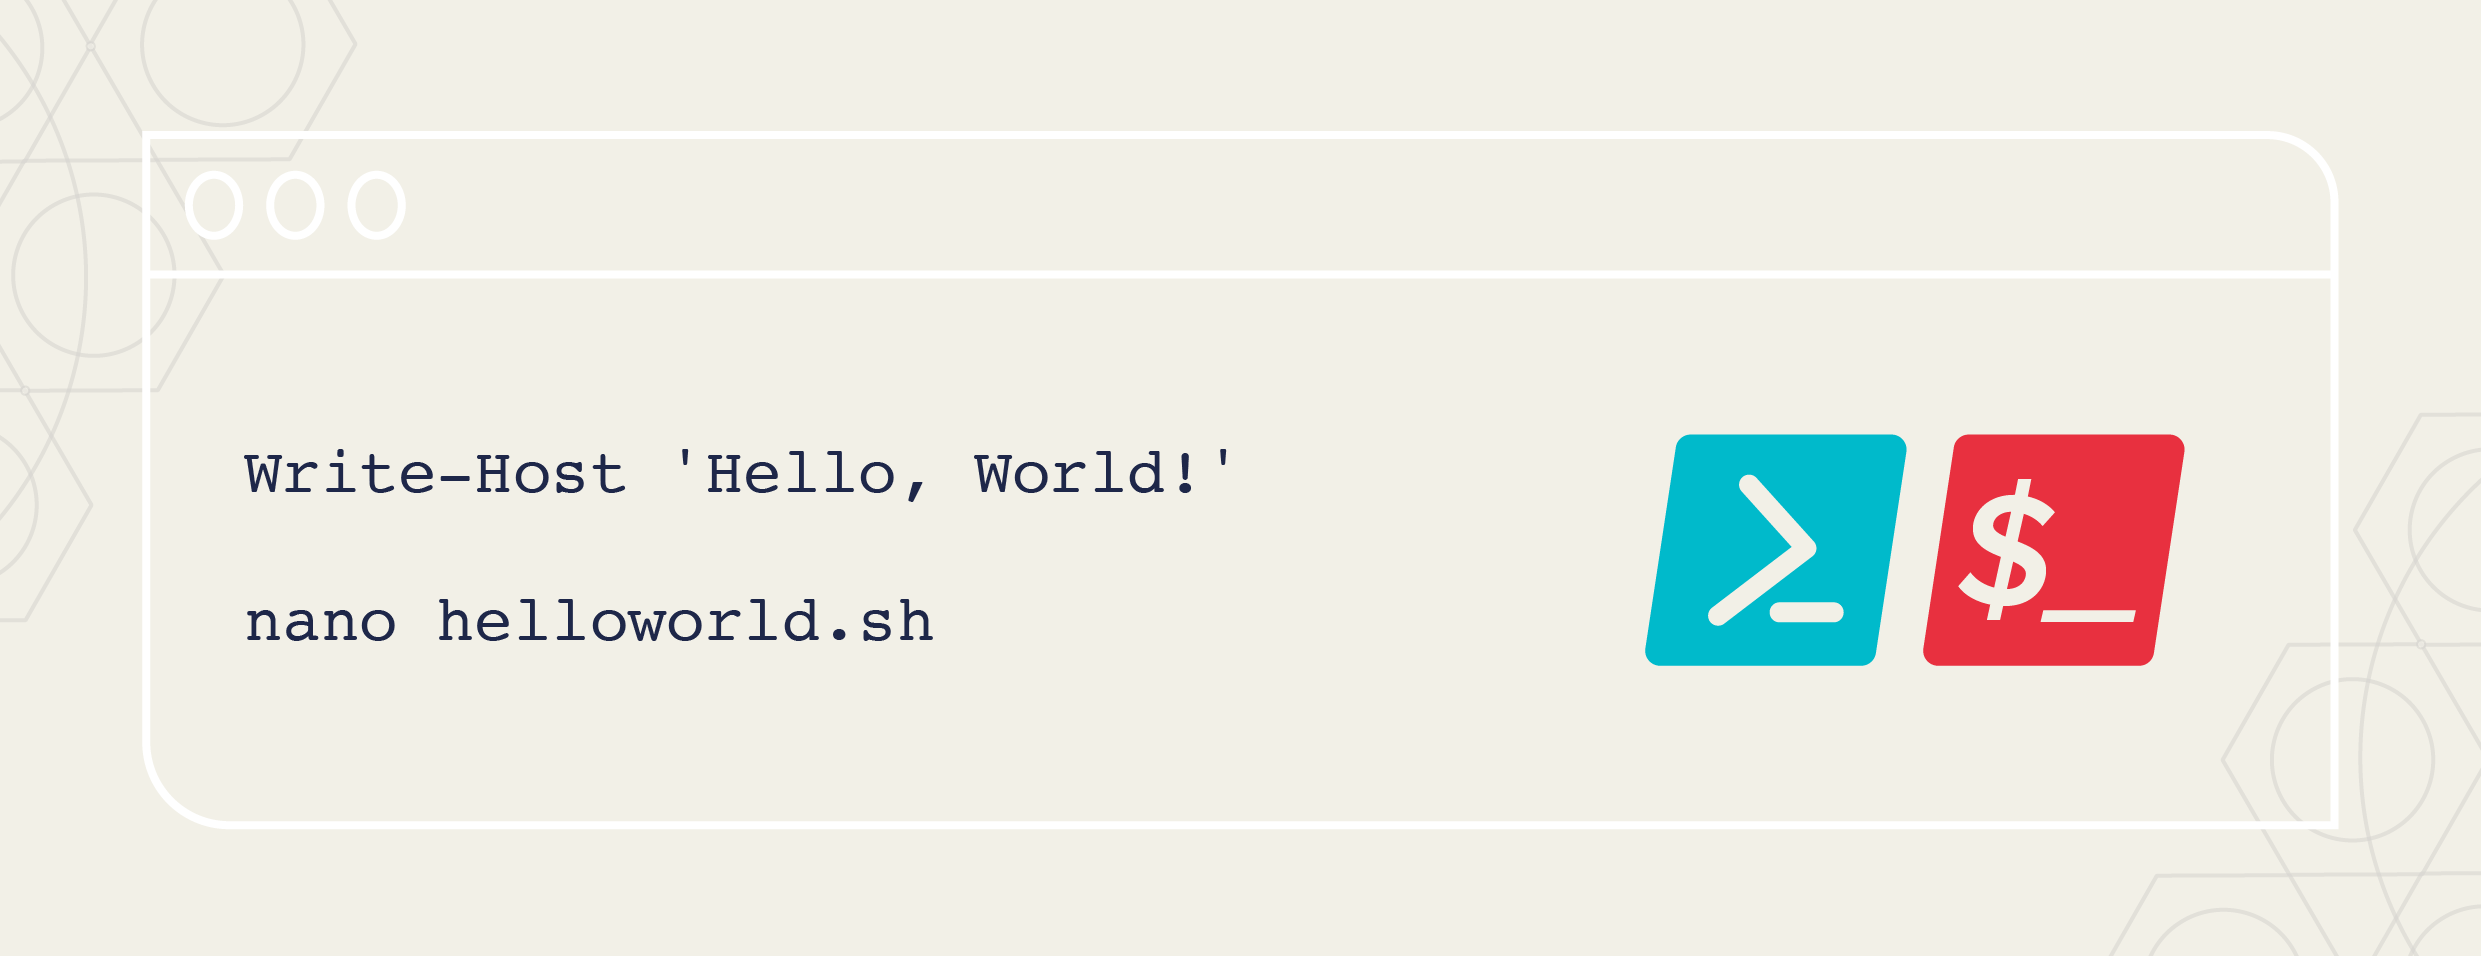 powershell and bash programming languages "hello world" codes and logos